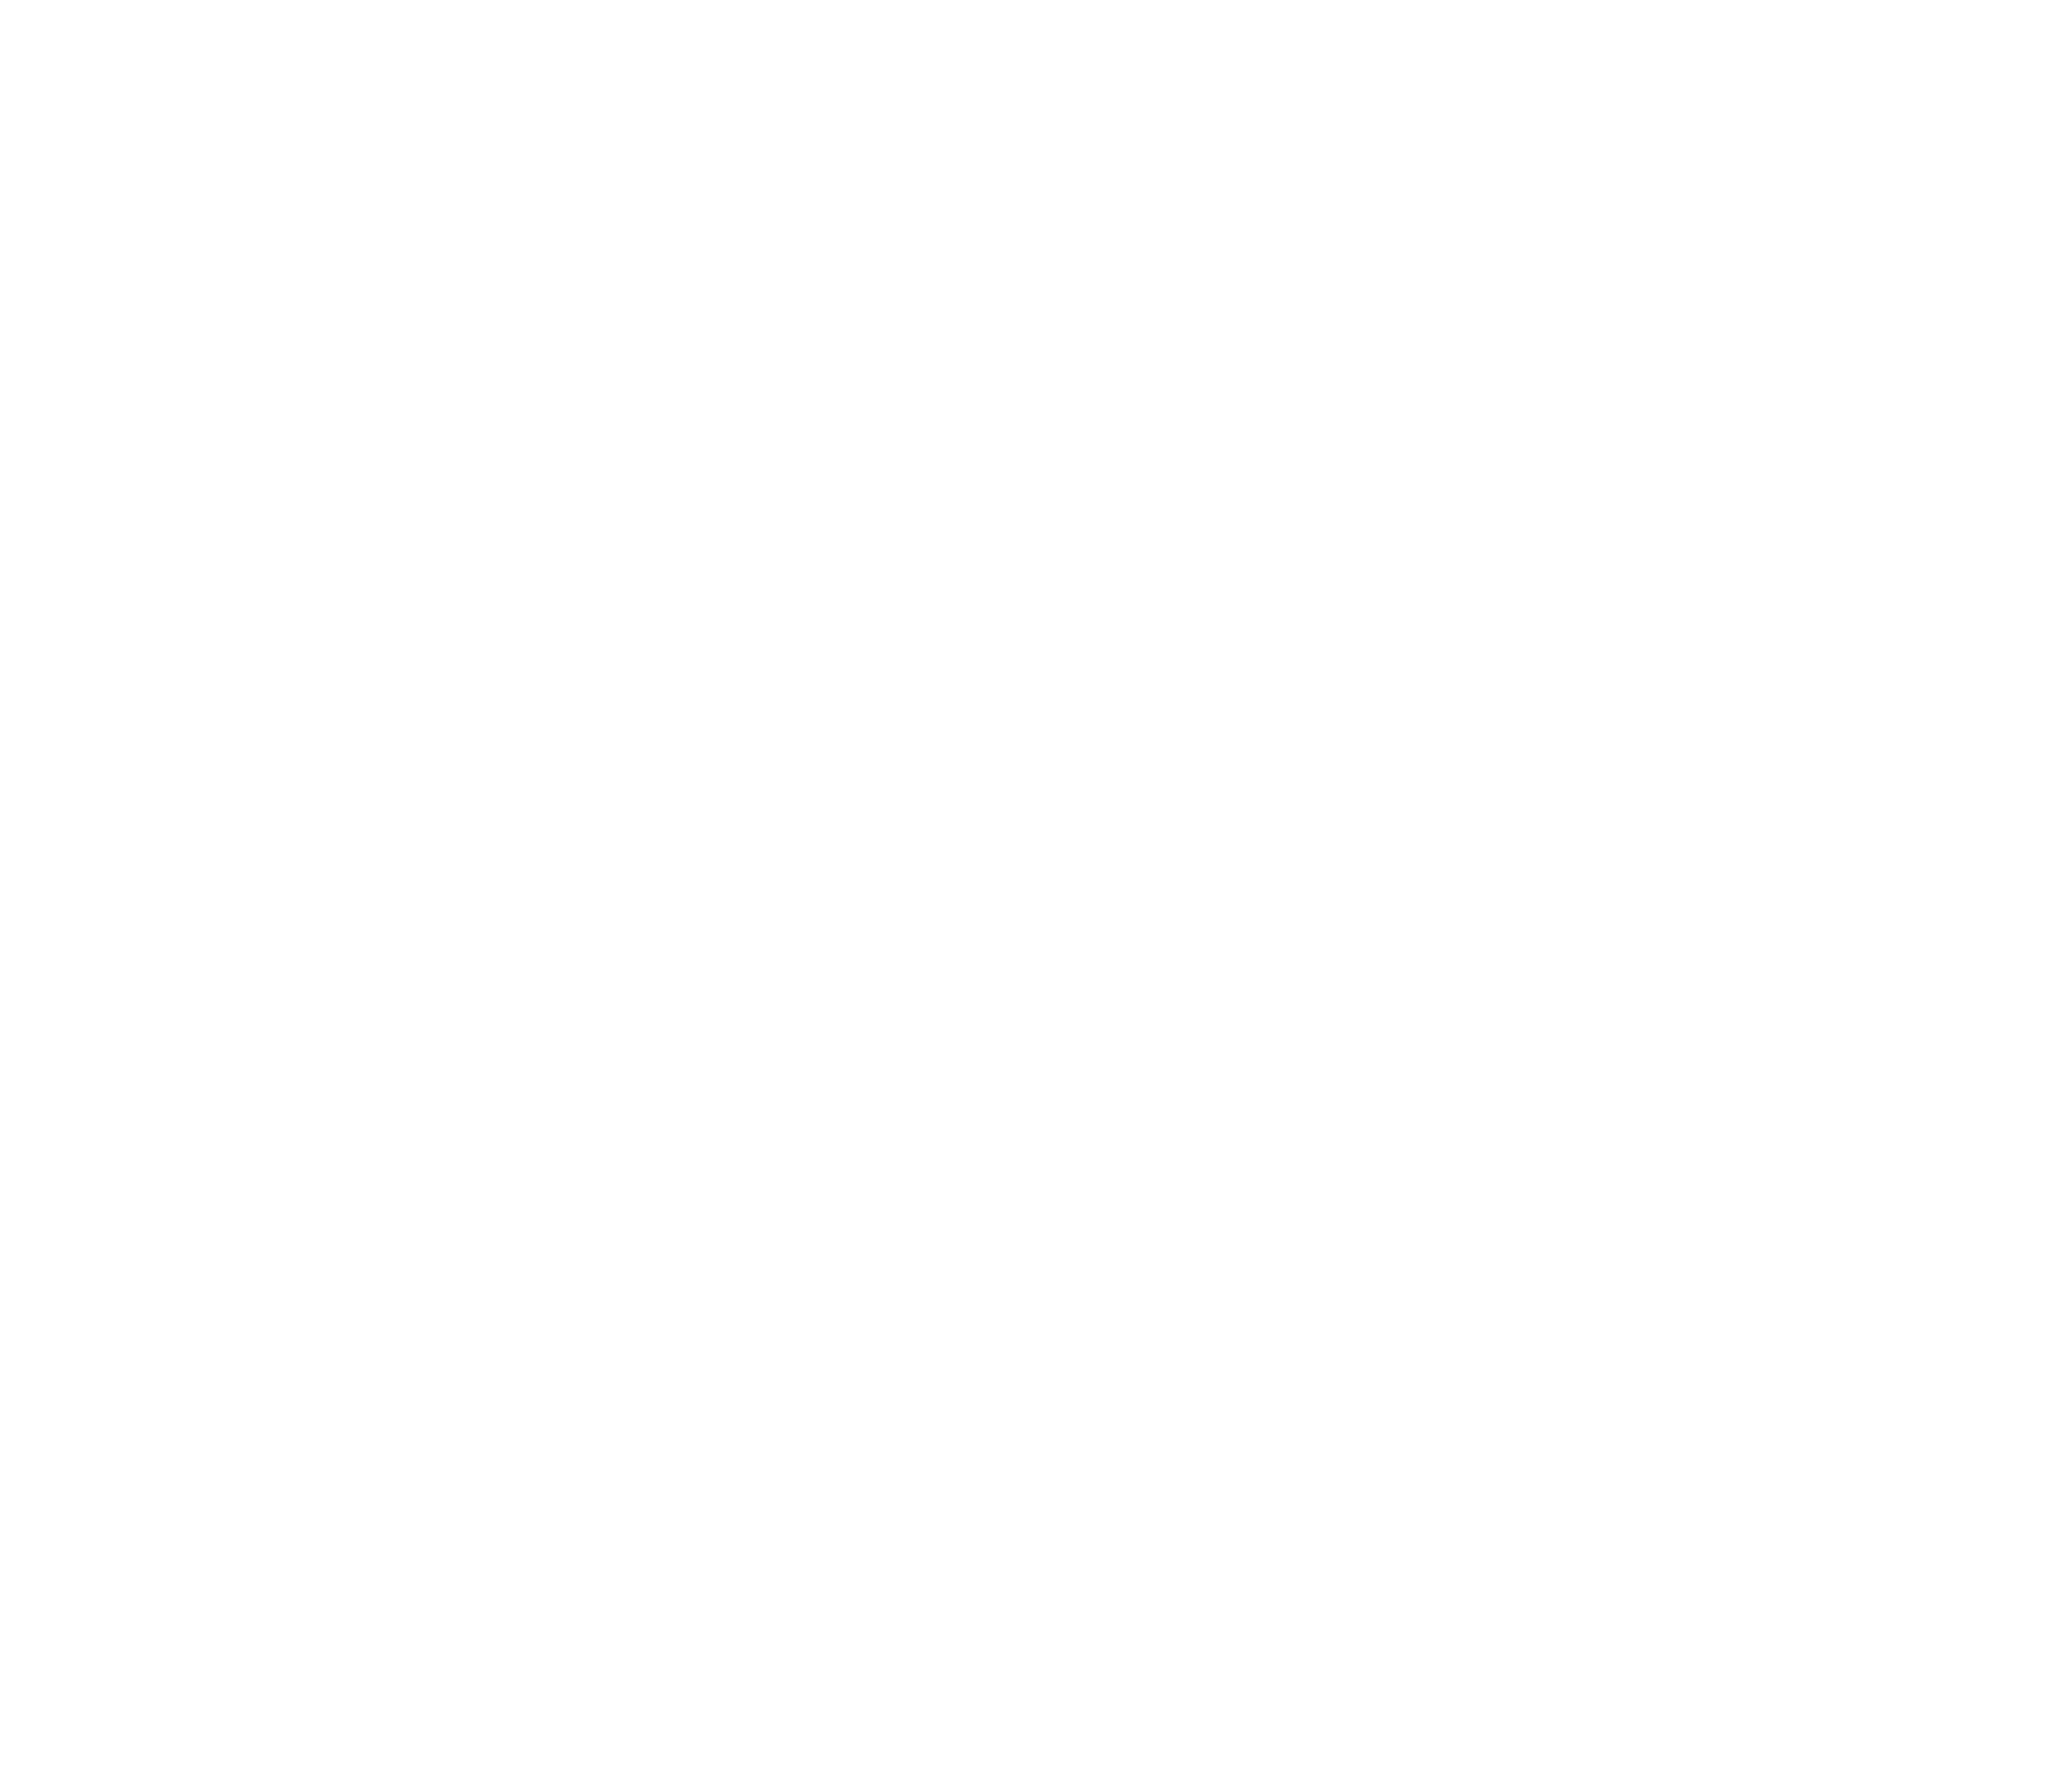 Balance Scale Icon